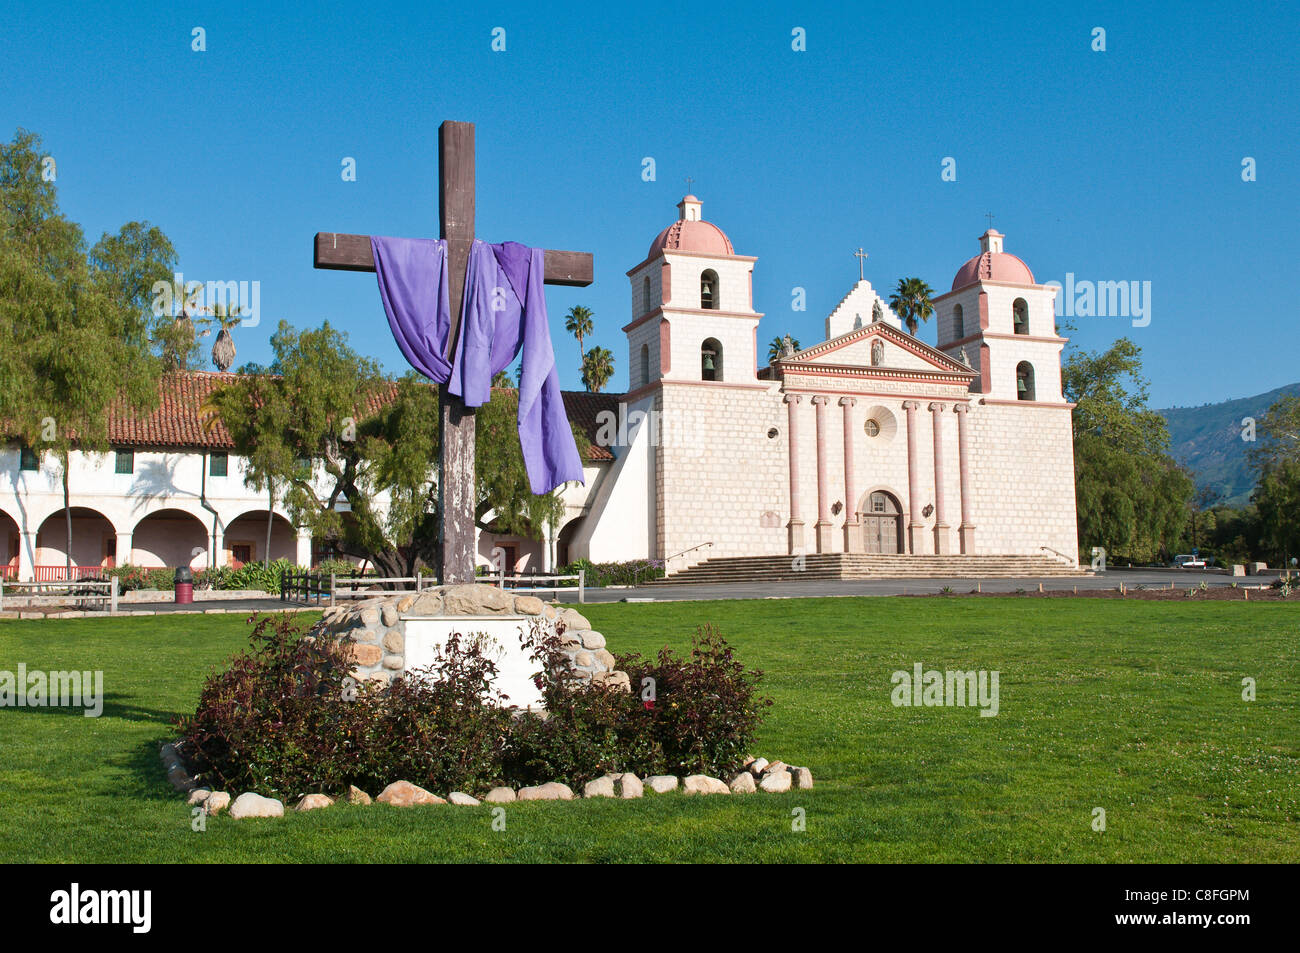 Santa Barbara Mission, Santa Barbara, California, United States of America Stock Photo